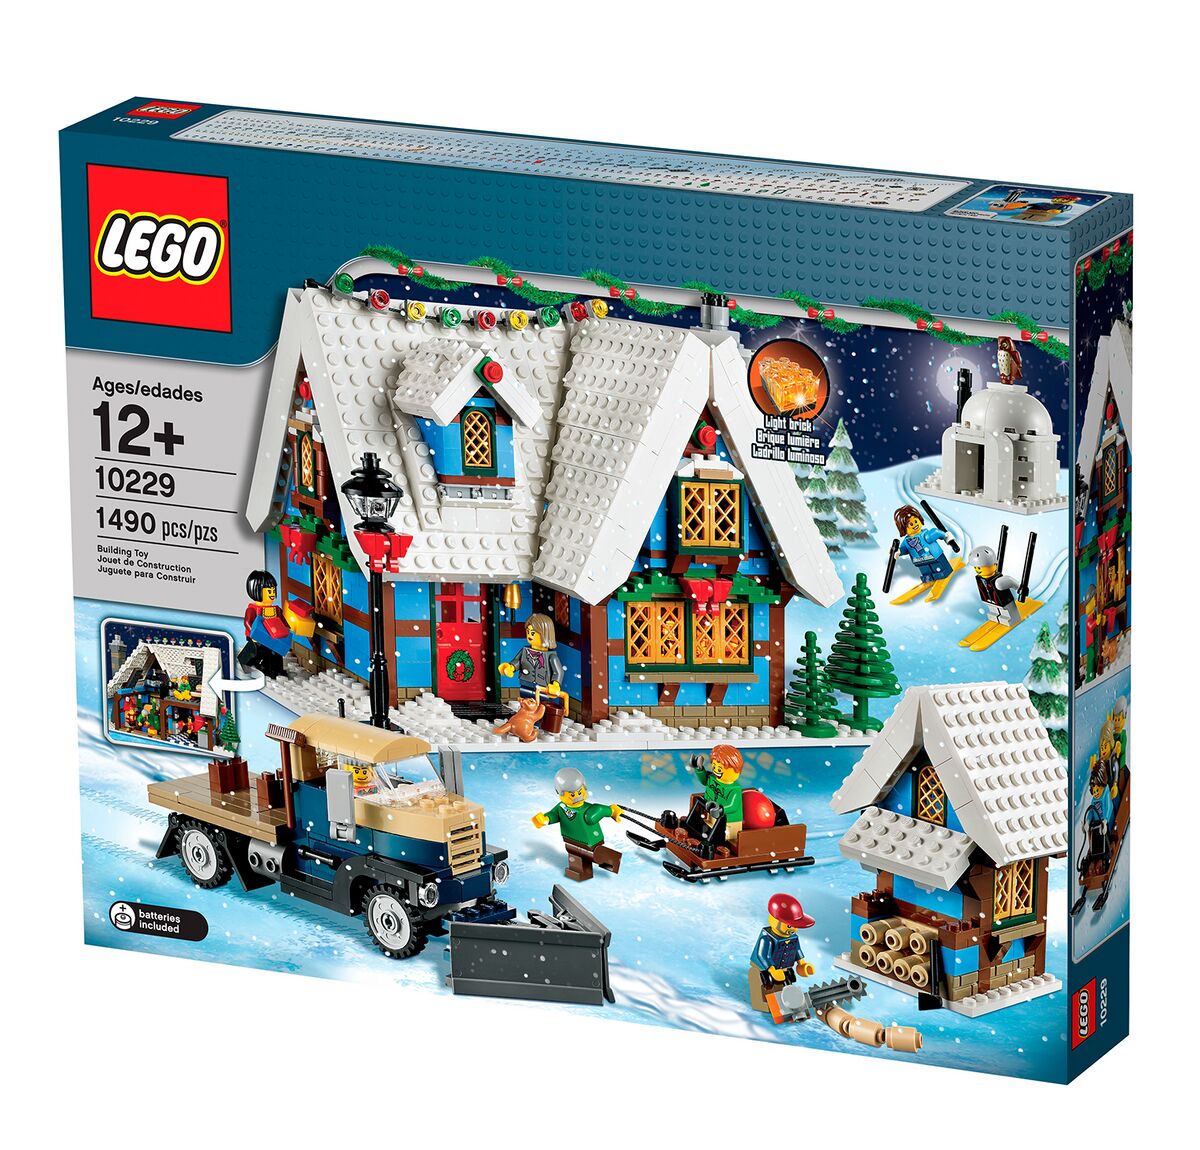 LEGO Luggage 4-Piece Toy Organizer Tote, Brickipedia